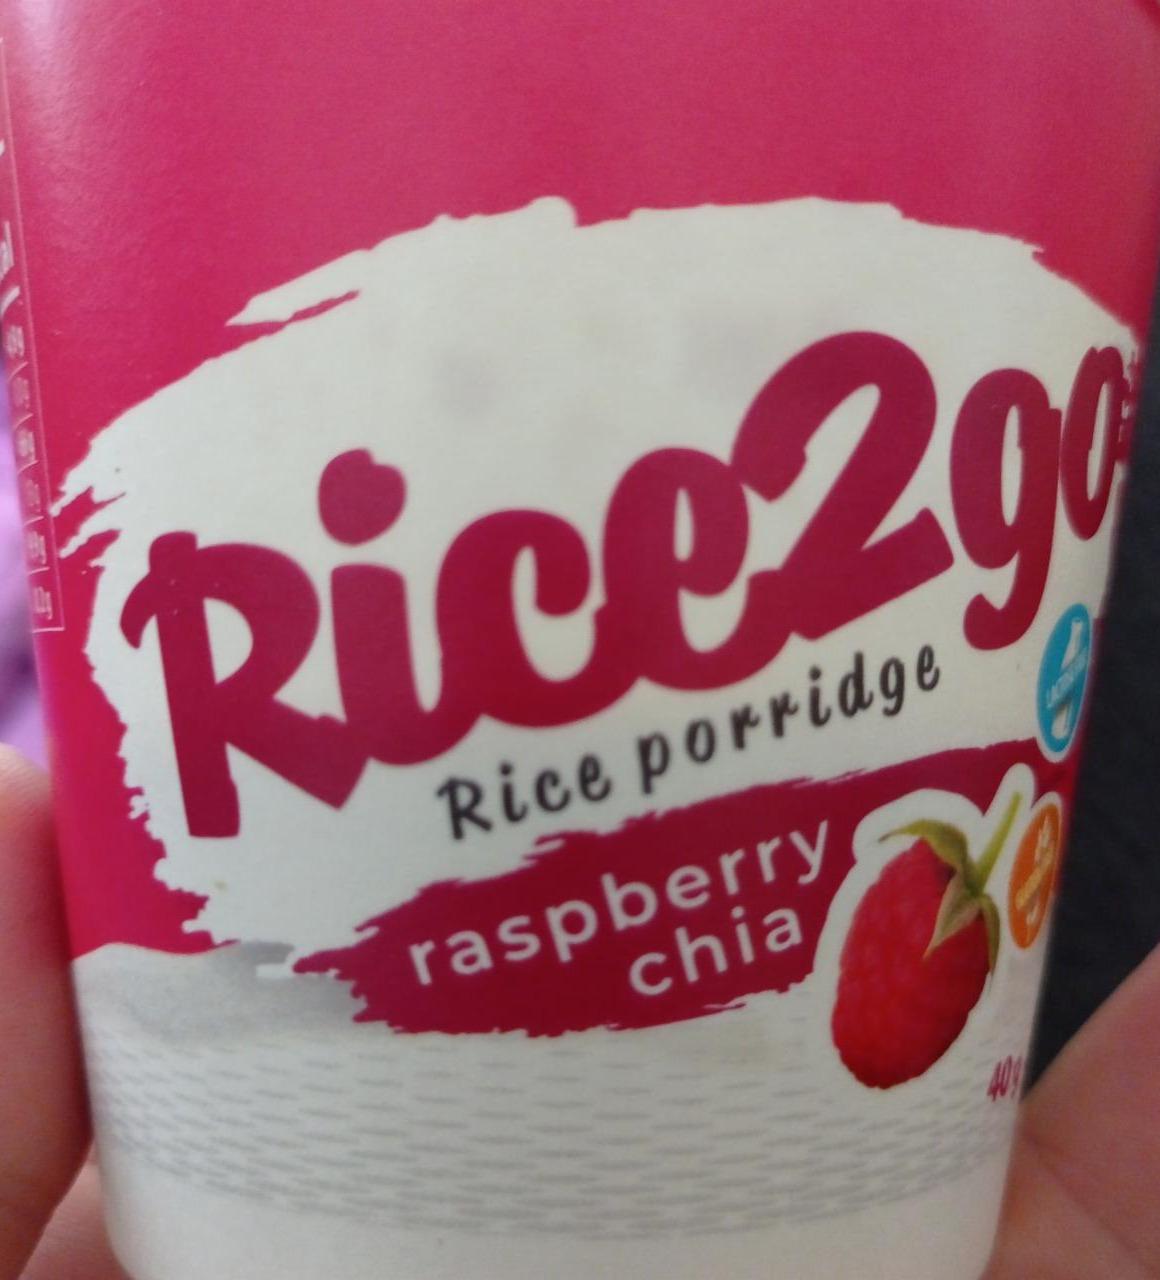 Fotografie - Rice porridge raspberry chia Rice2go